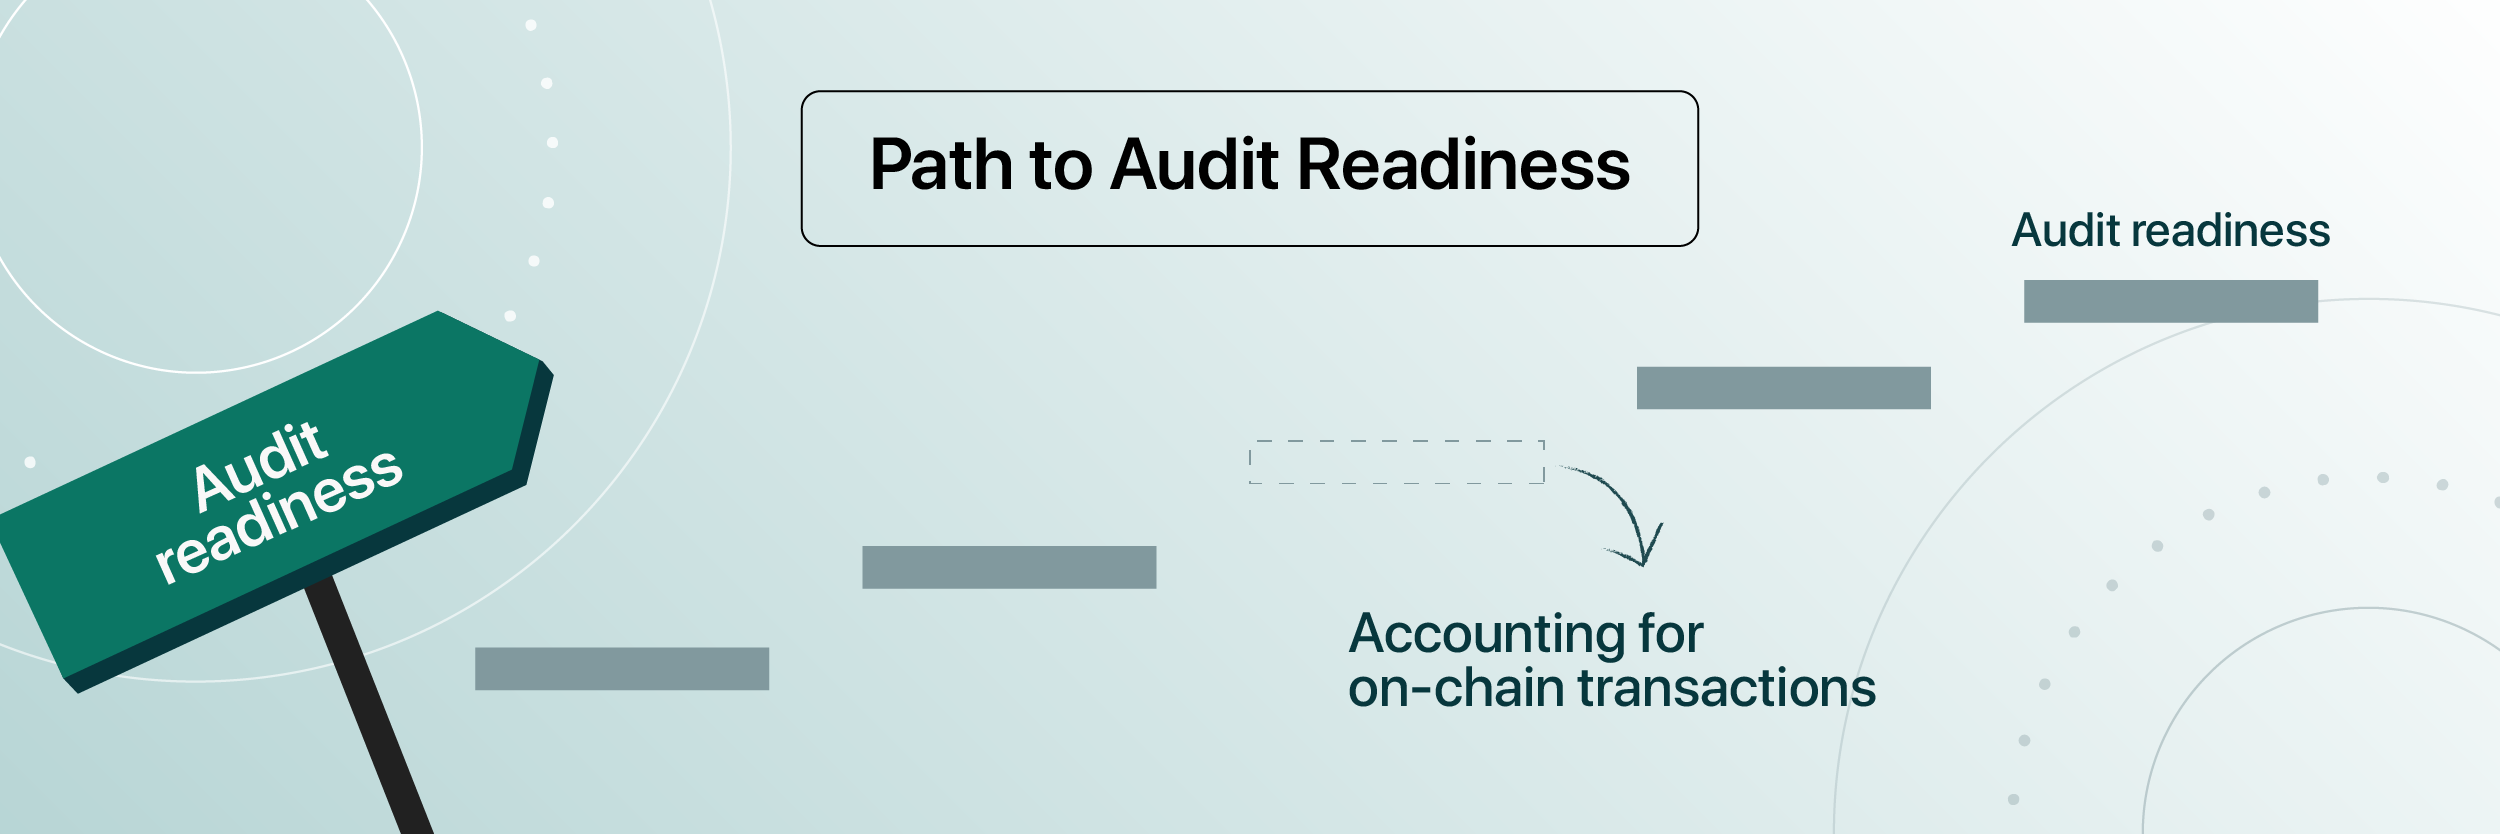 Blog 2_Audit readiness gap